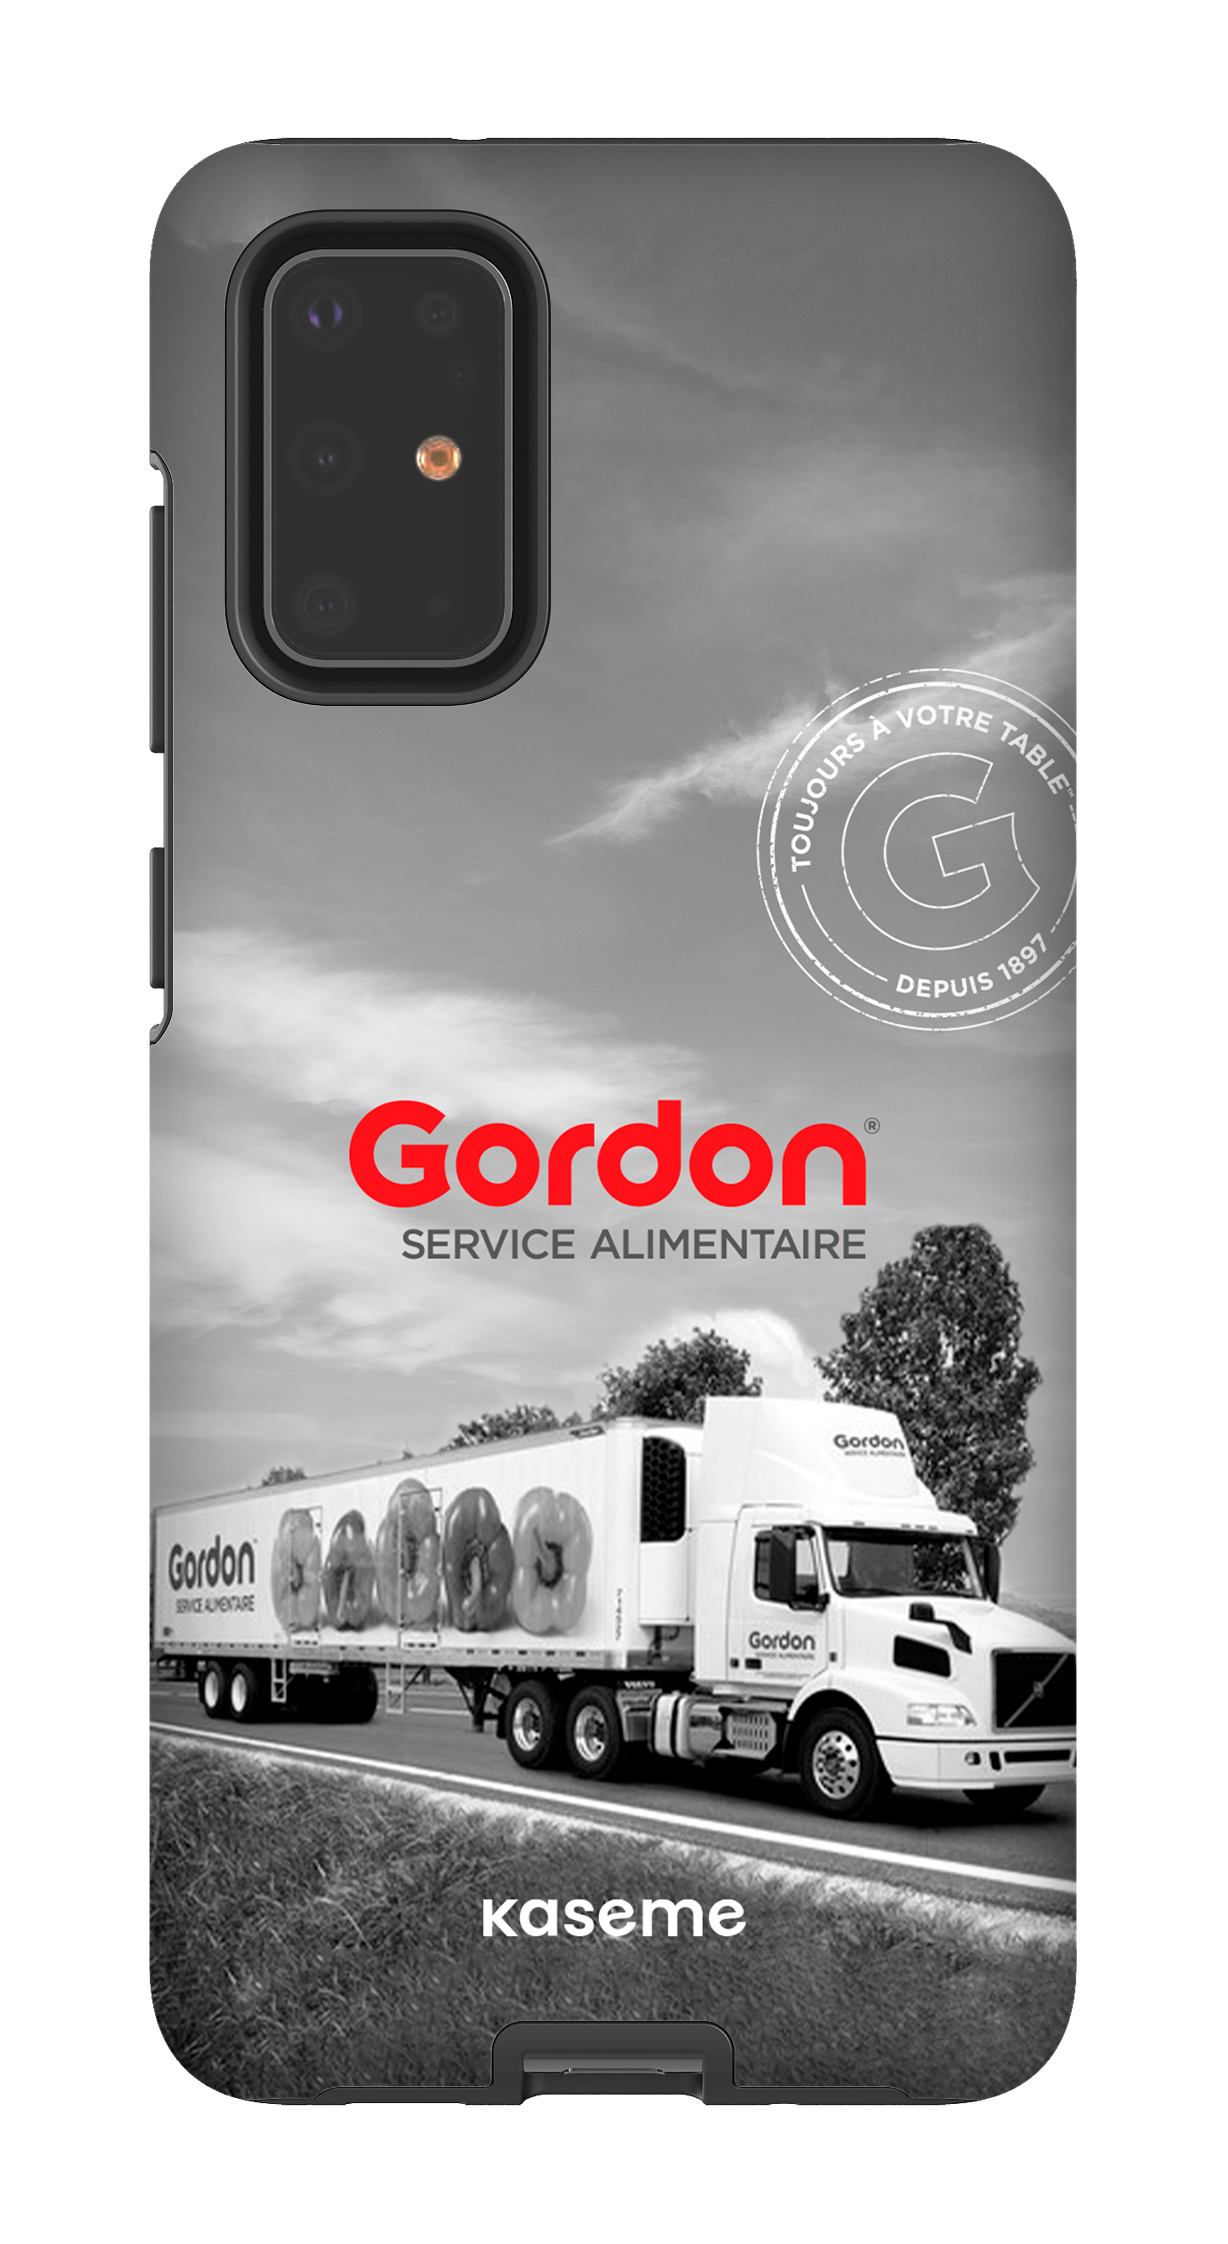 Gordon Francais - Galaxy S20 Plus